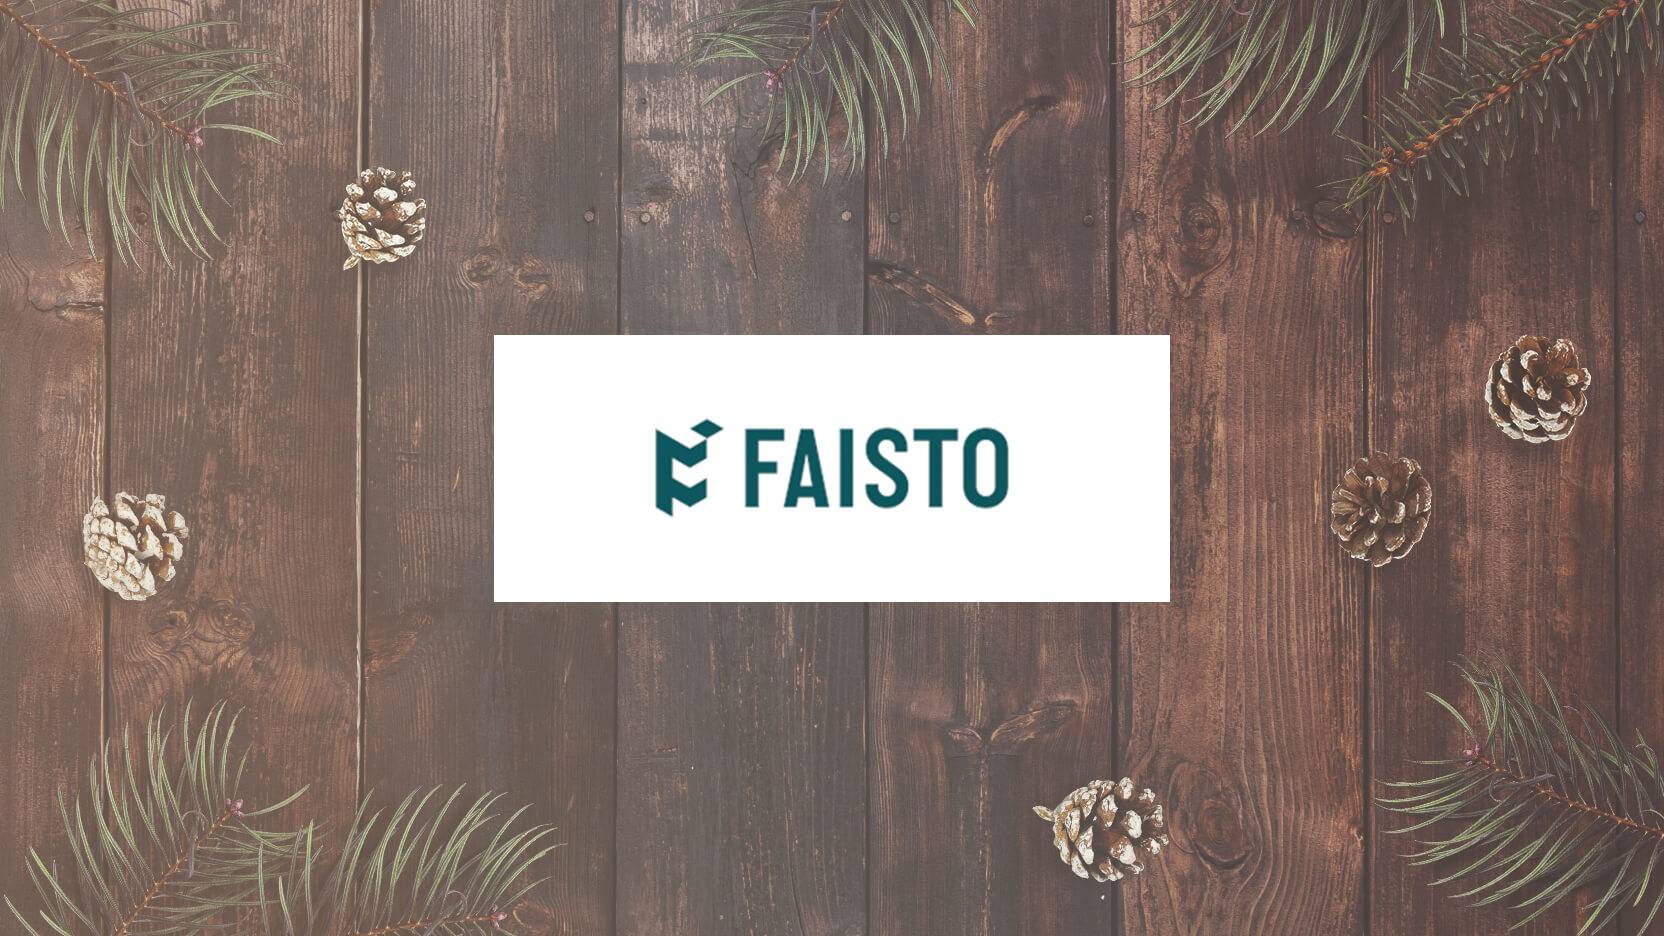 Låge 18: Jul overalt - også hos Faisto med 20% på DeWalt